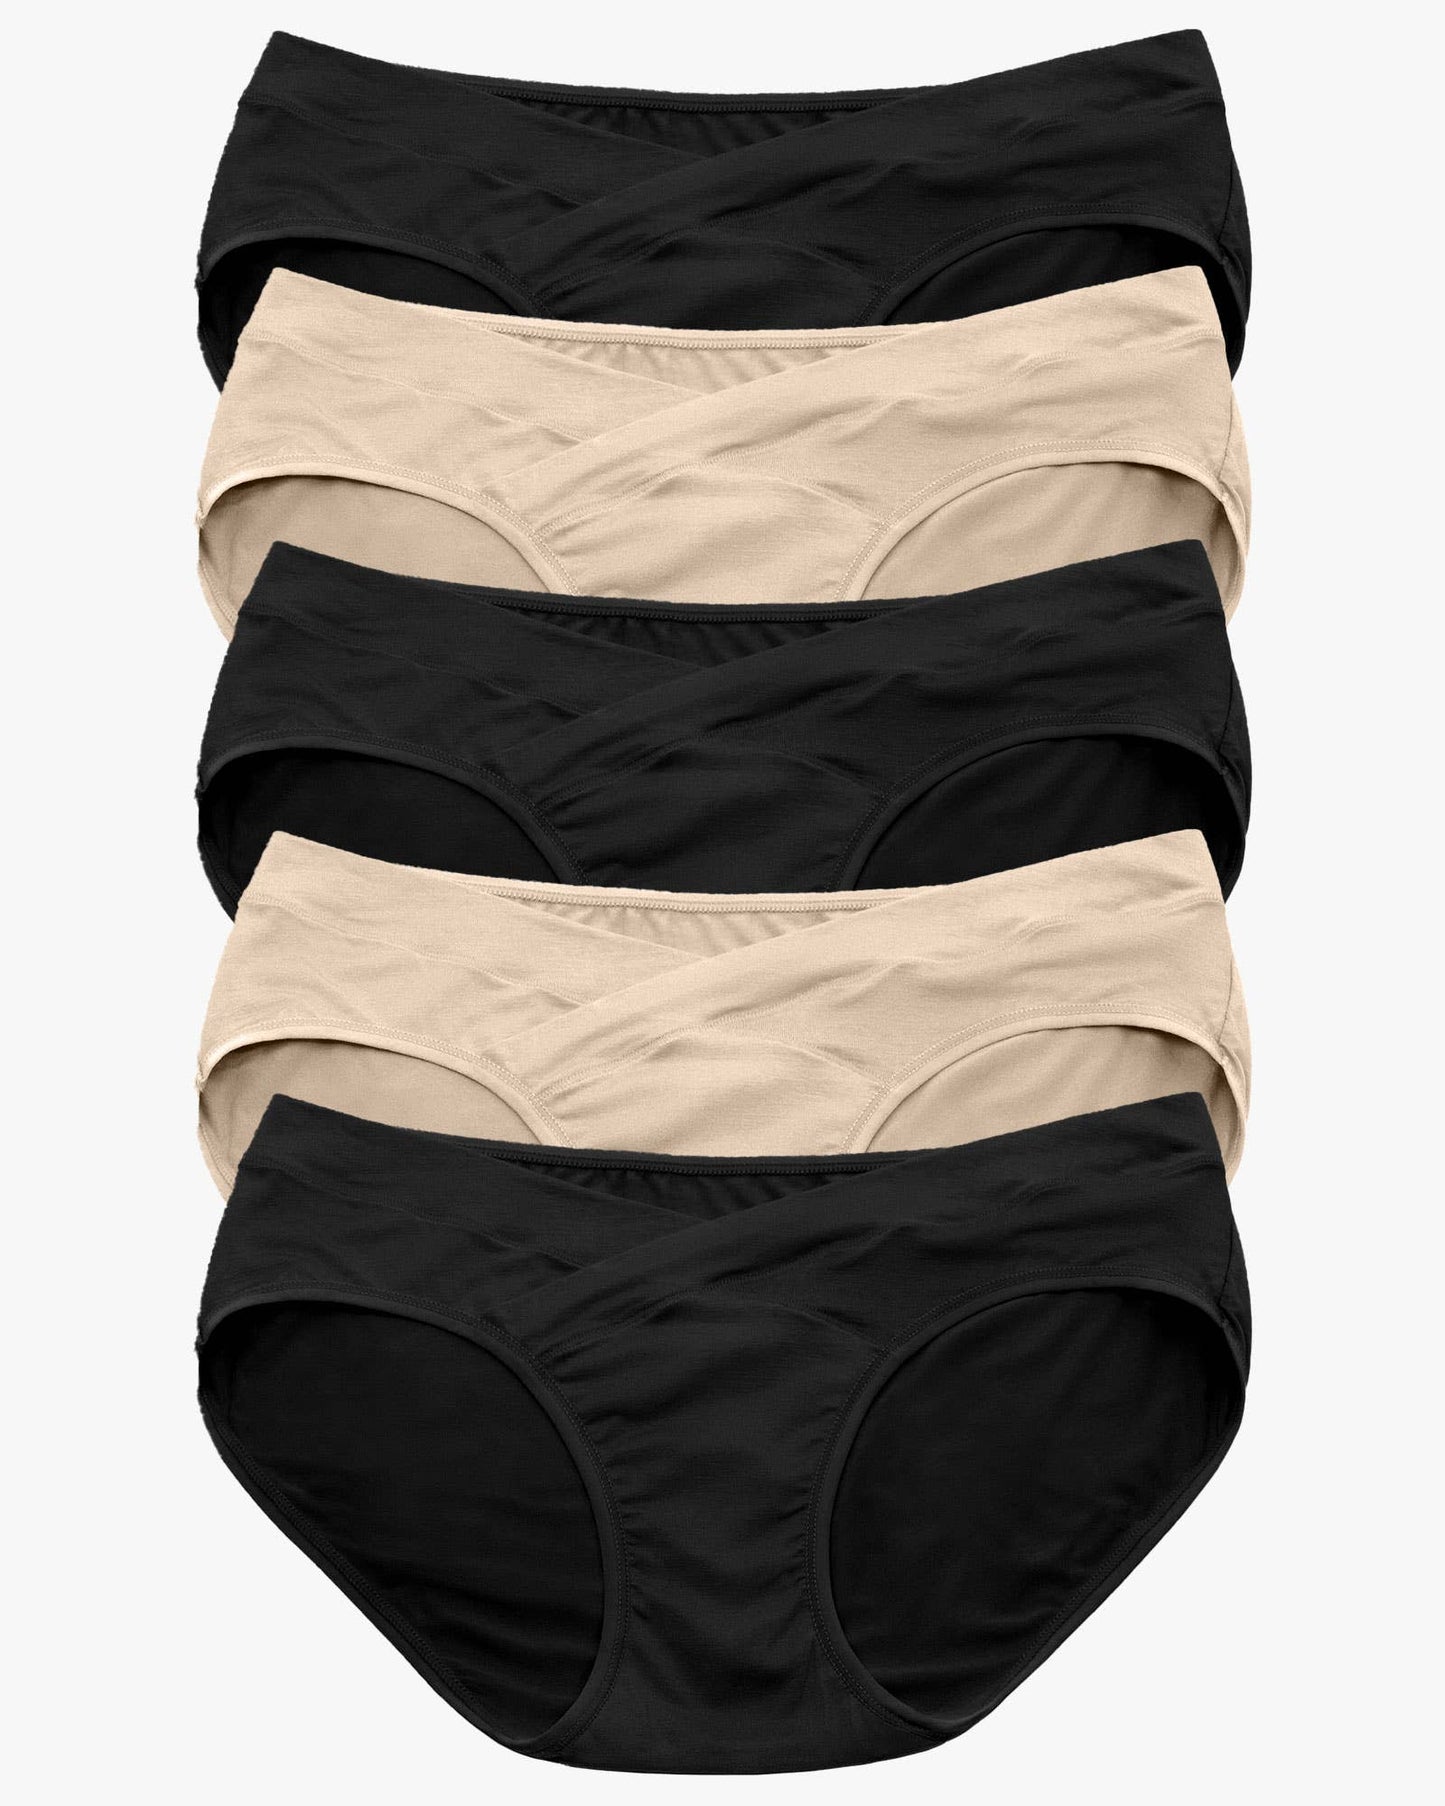 Kindred Bravely - Under-the-Bump Bikini Underwear (5-Pack)Maternity/Postpartum